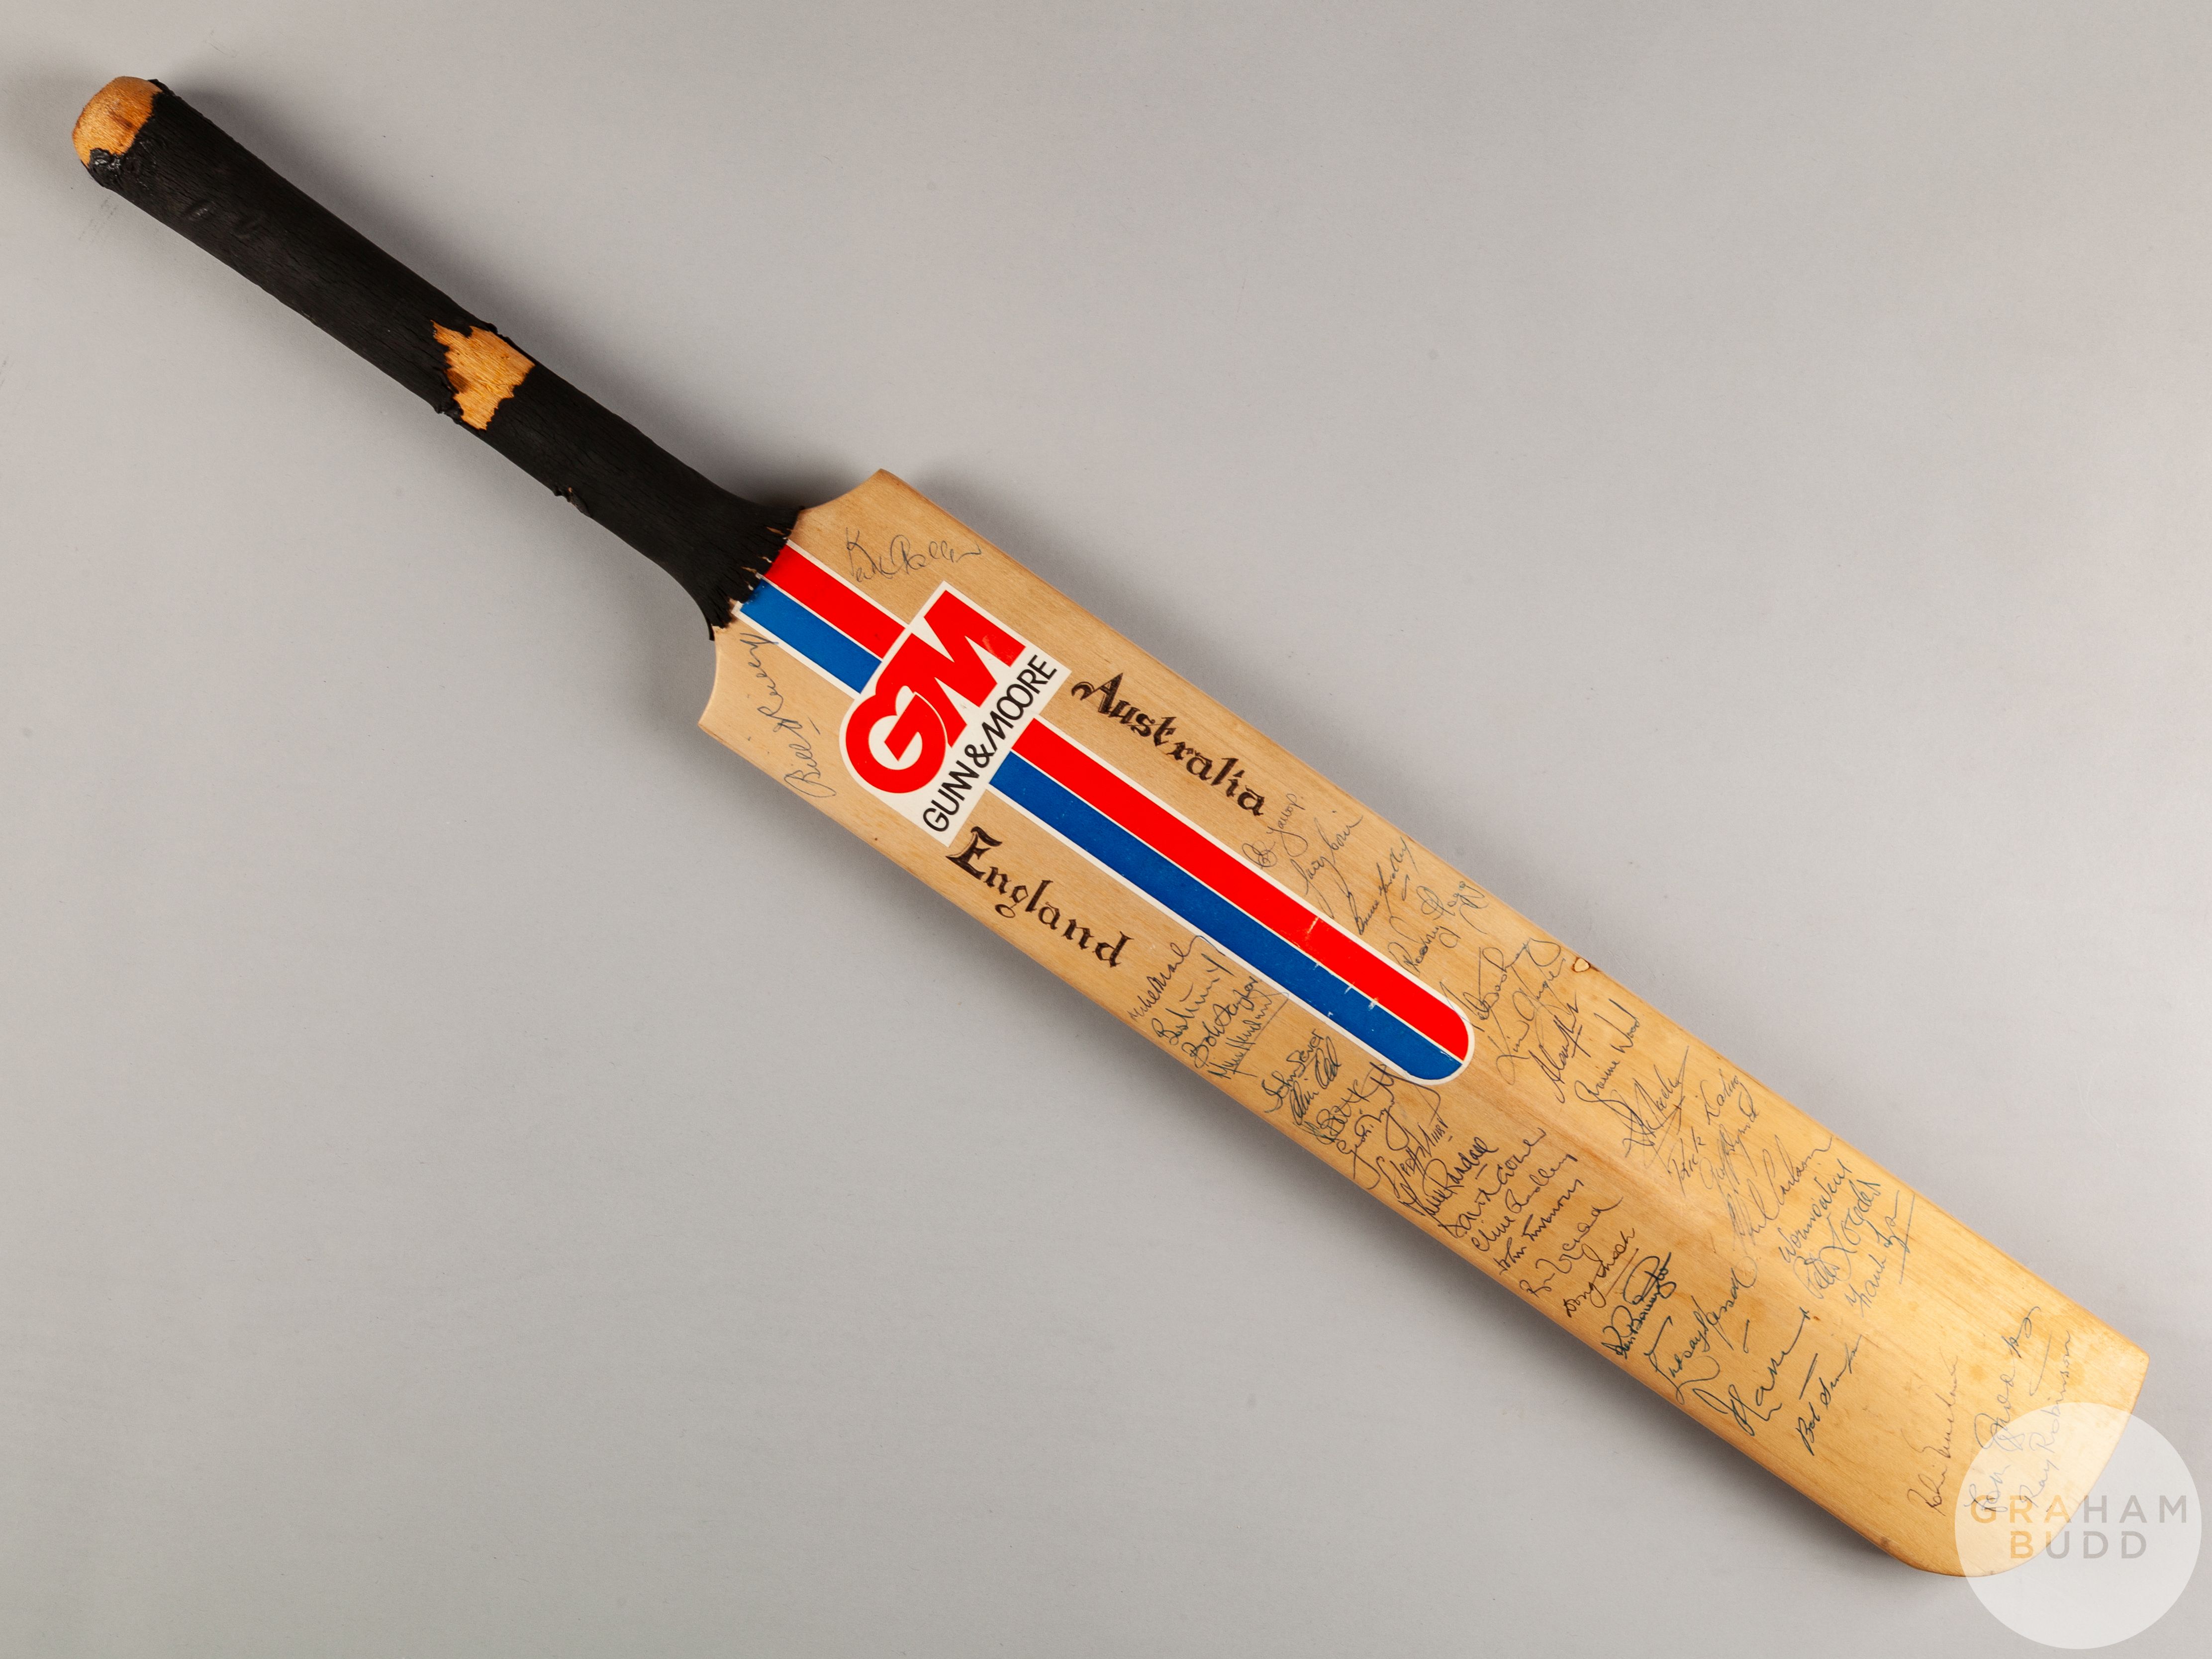 Western Australia team signed Gunn & Moore cricket bat, - Image 2 of 2